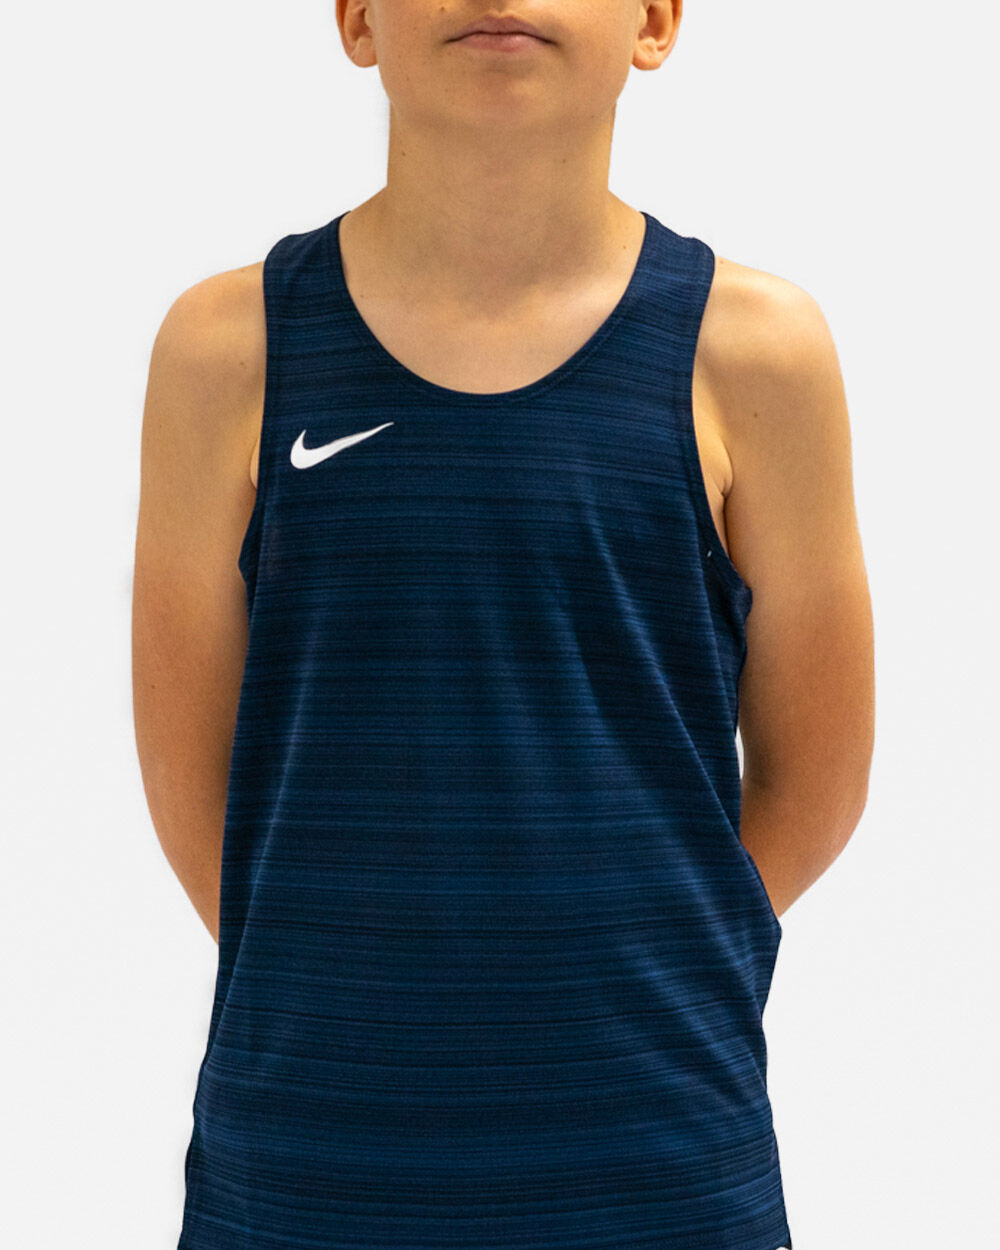 Camiseta sin mangas de running Nike Stock Azul Marino para Niño - NT0302-451